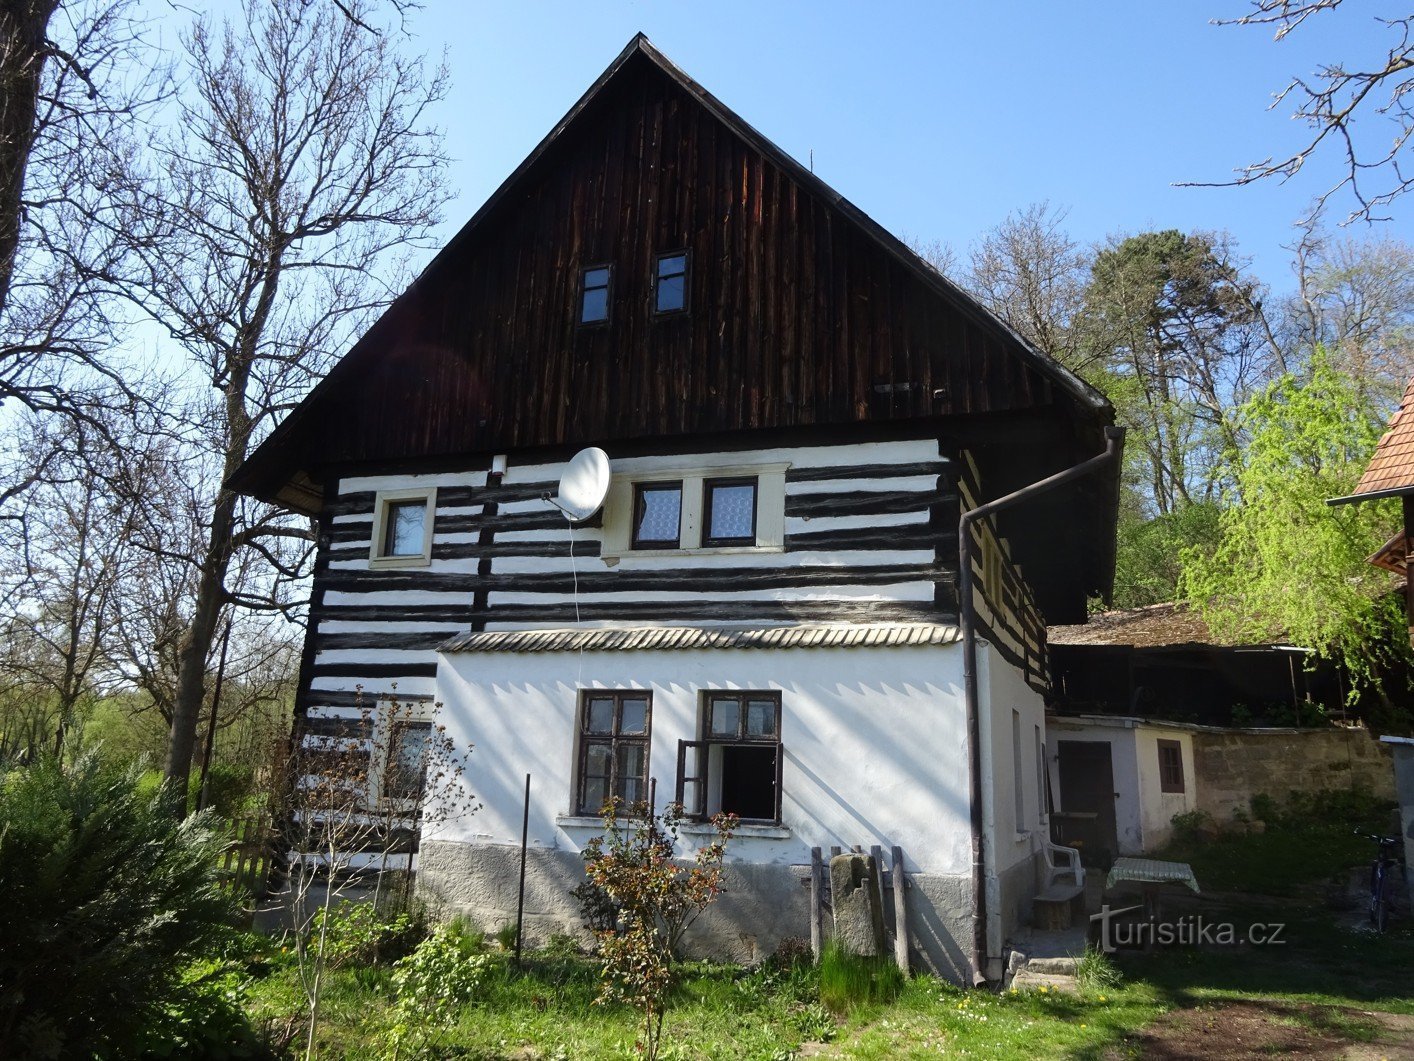 Vas Střehom blizu Dolní Bouzov in pravljični mlin